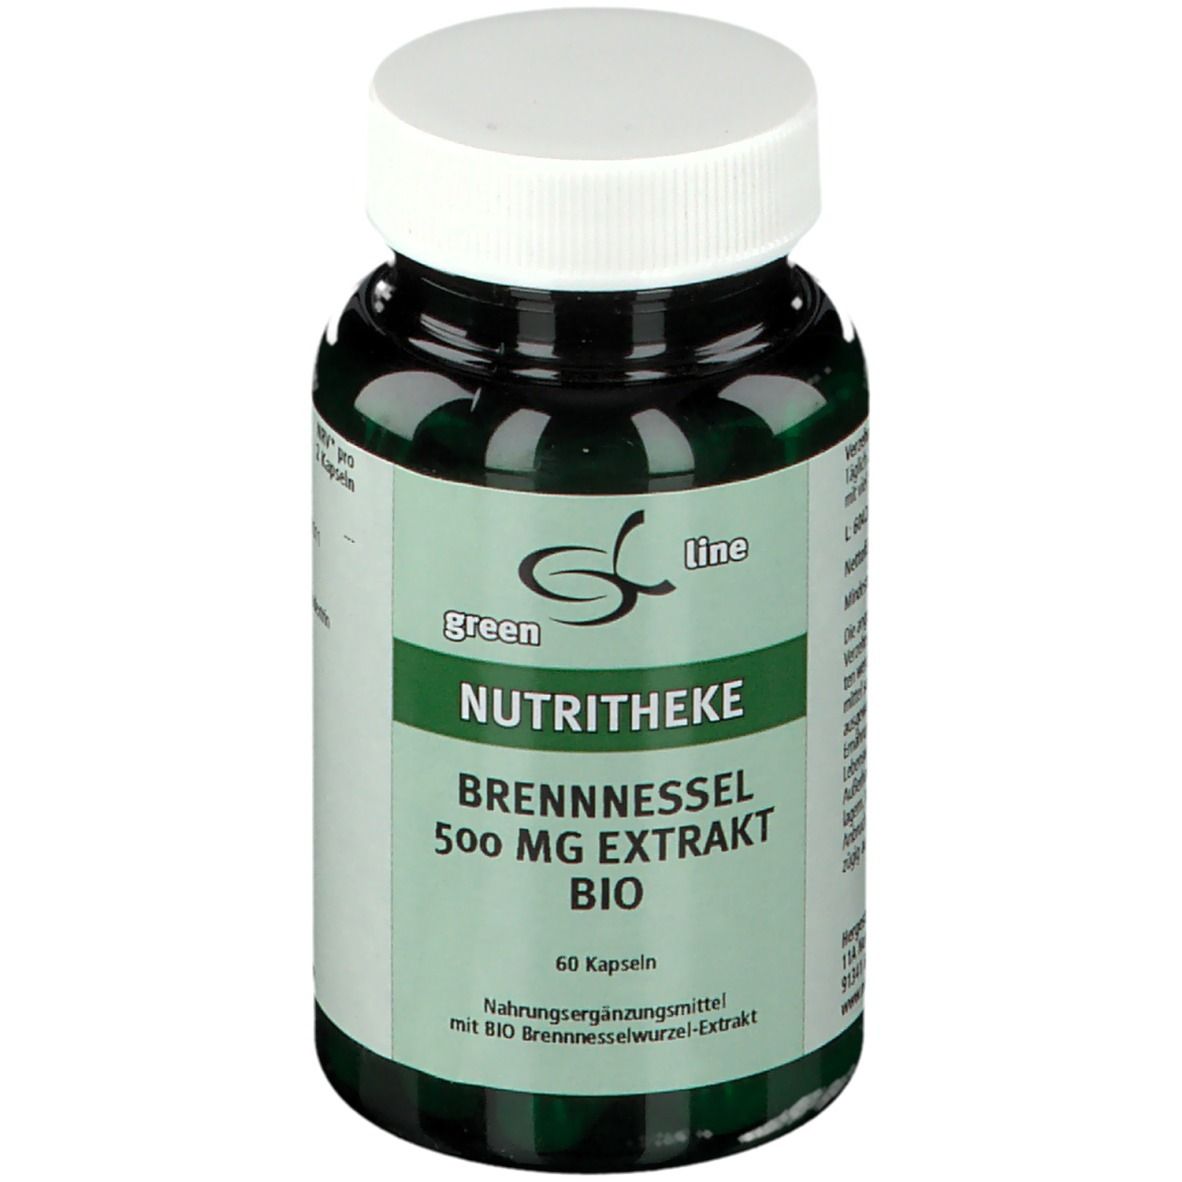 11 A Nutritheke GmbH green line Brennessel 500 mg Extrakt BIO